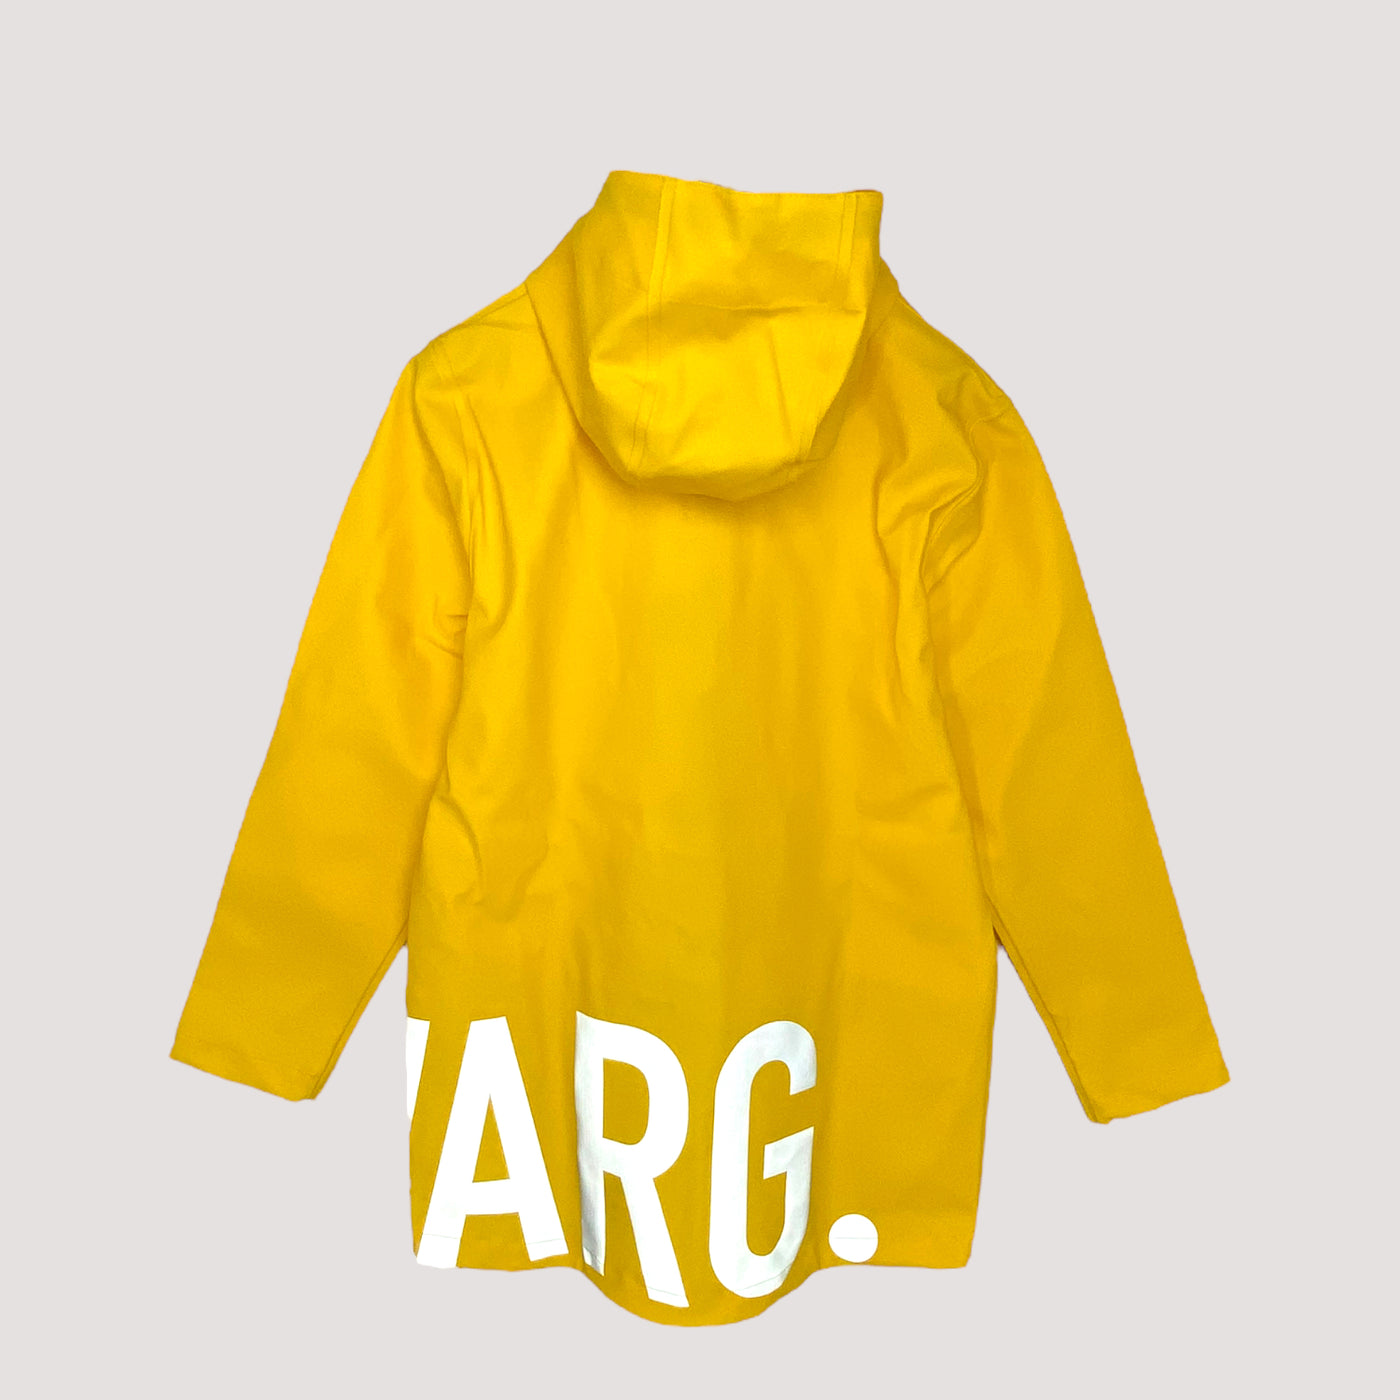 Varg göteborg rainjacket, yellow | unisex XS